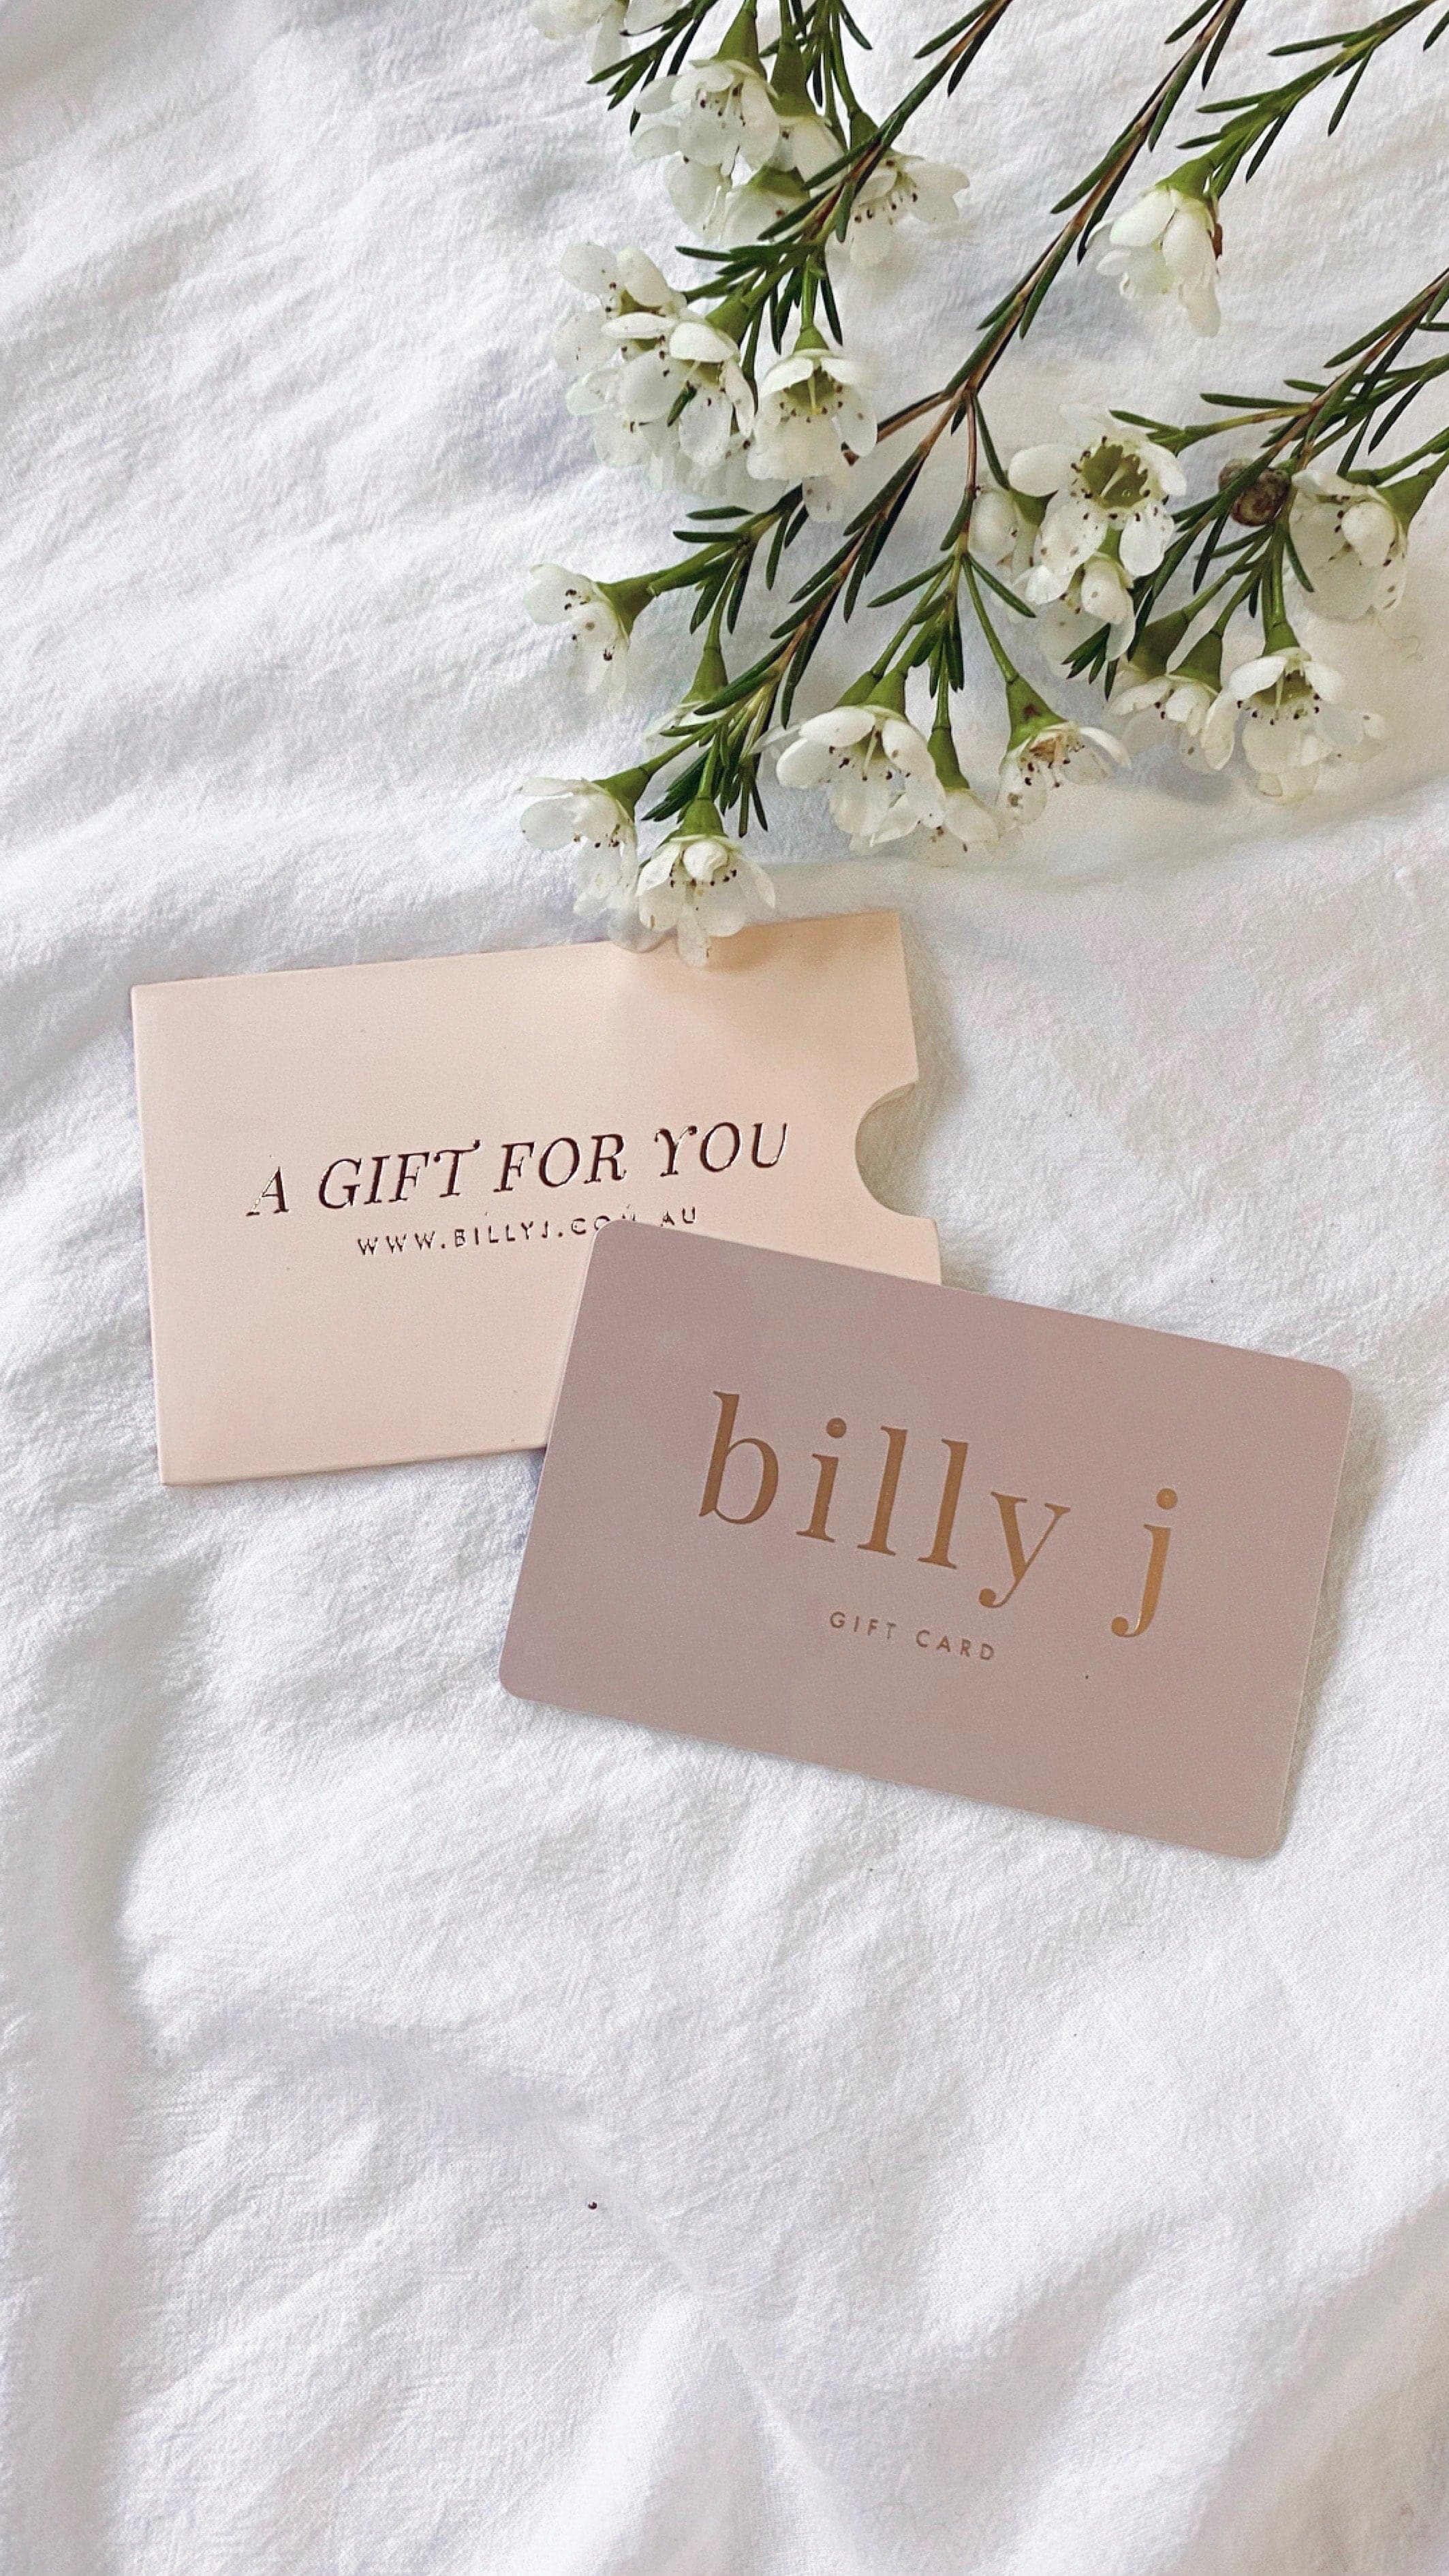 Gift Card - $50 - Billy J